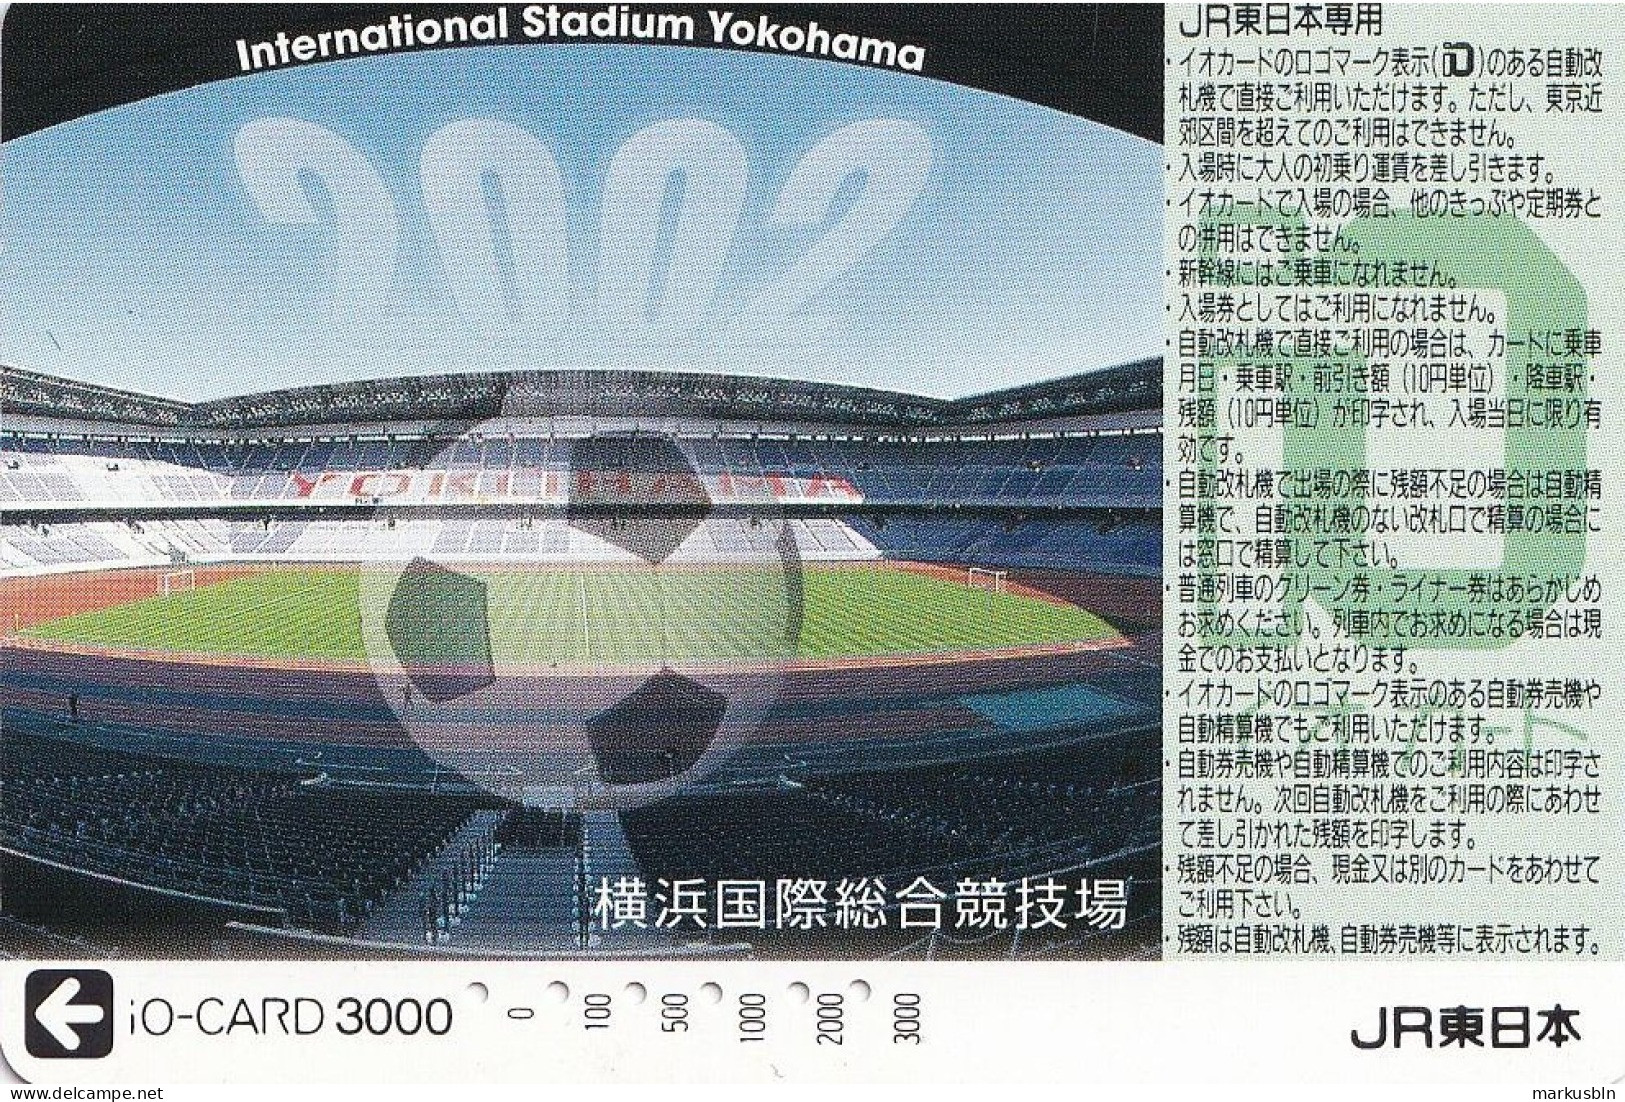 Japan Prepaid JR Card 3000 - World Cup 2002 Stadium Yokohama Football - Japan